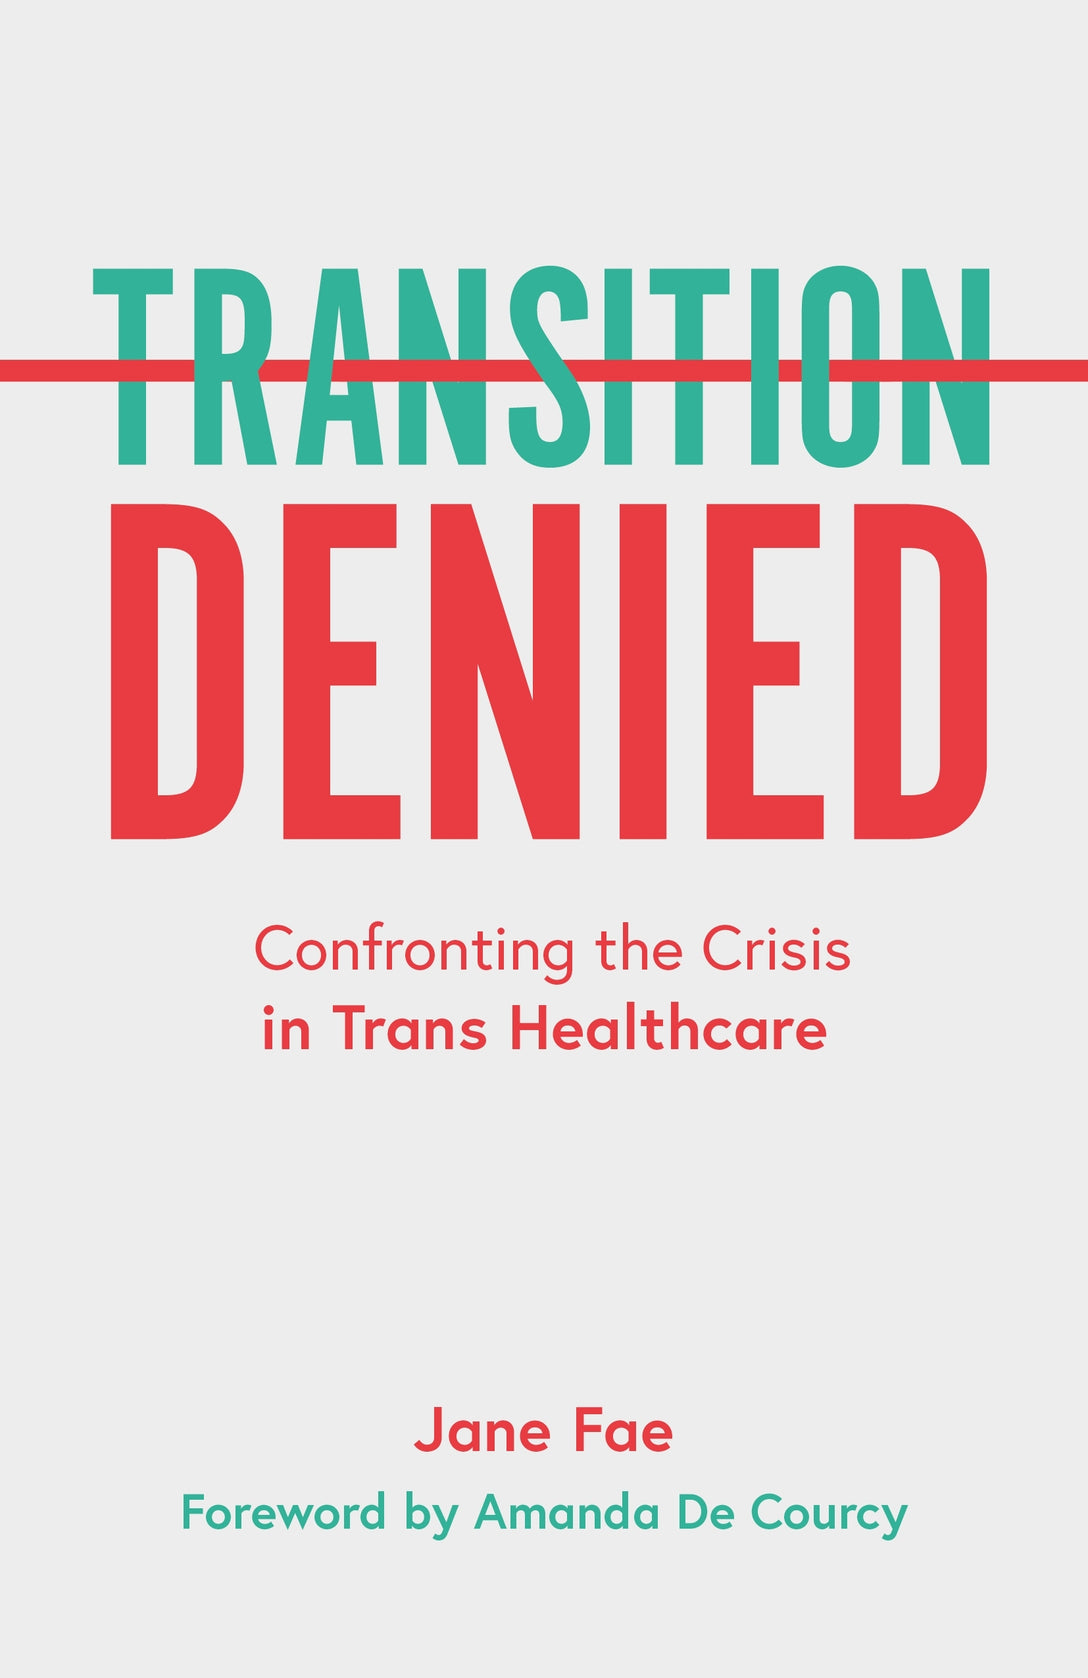 Transition Denied by Jane Fae